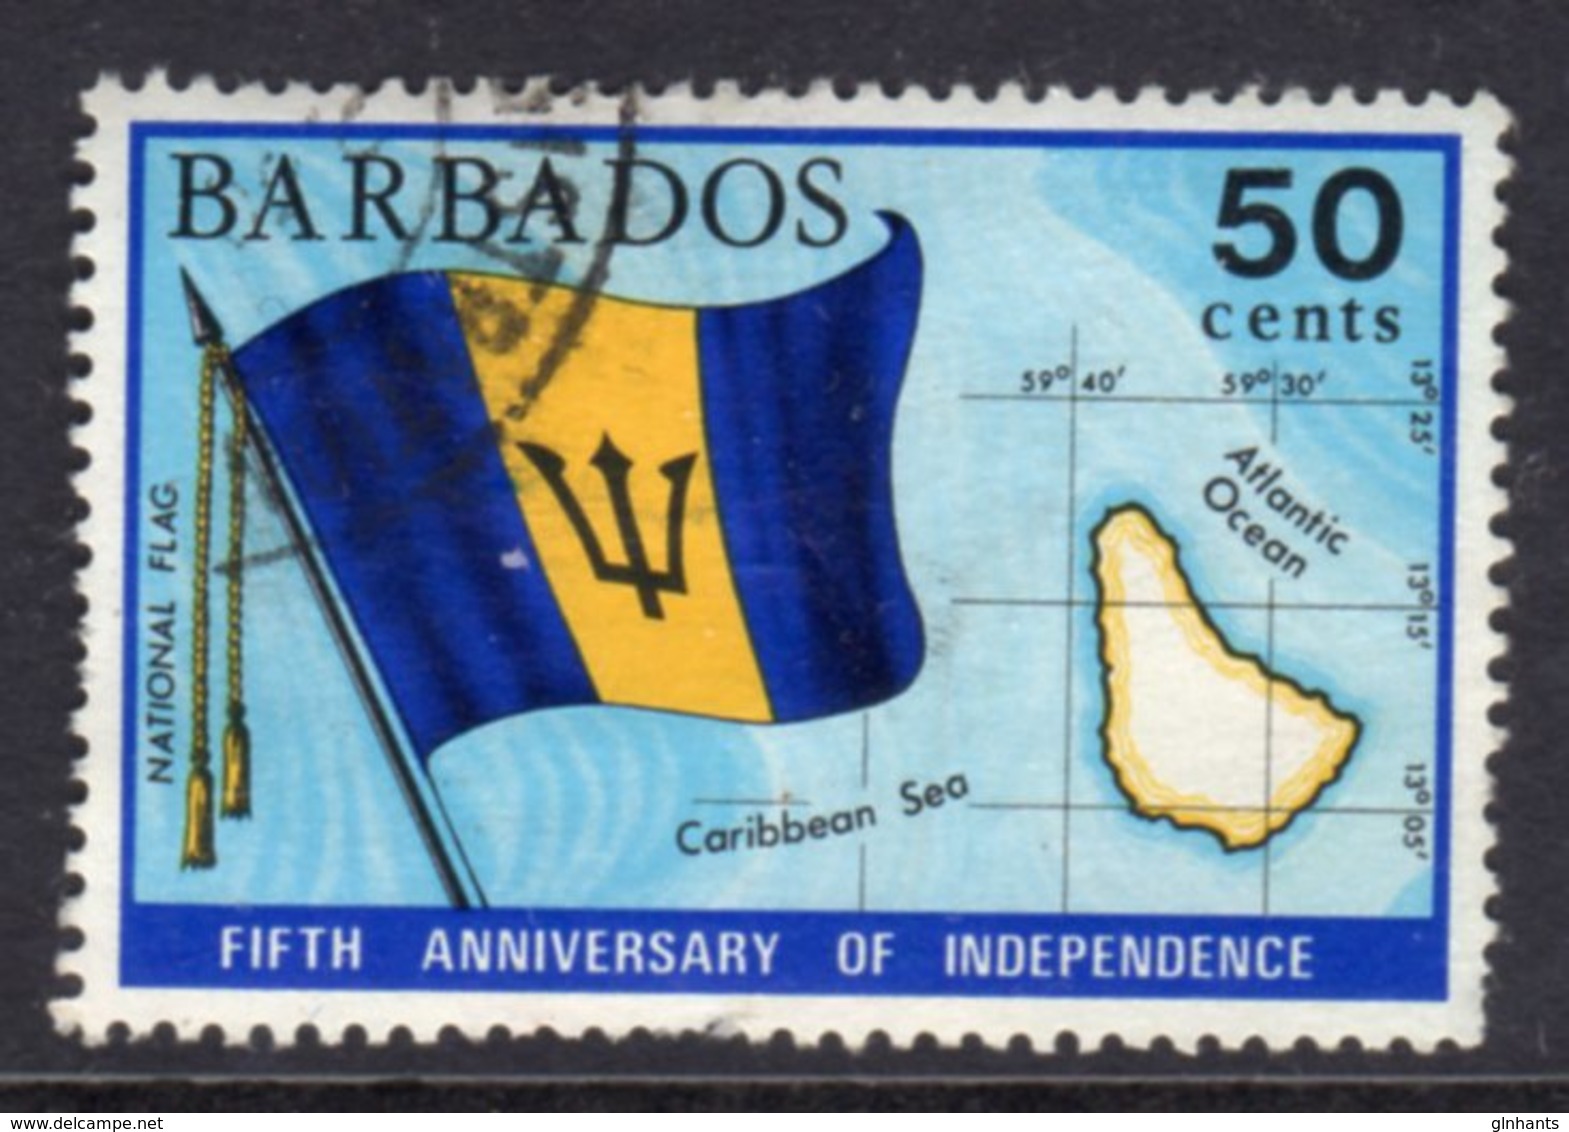 BARBADOS - 1971 50c INDEPENDENCE ANNIVERSARY STAMP GOOD USED SG 439 - Barbados (1966-...)